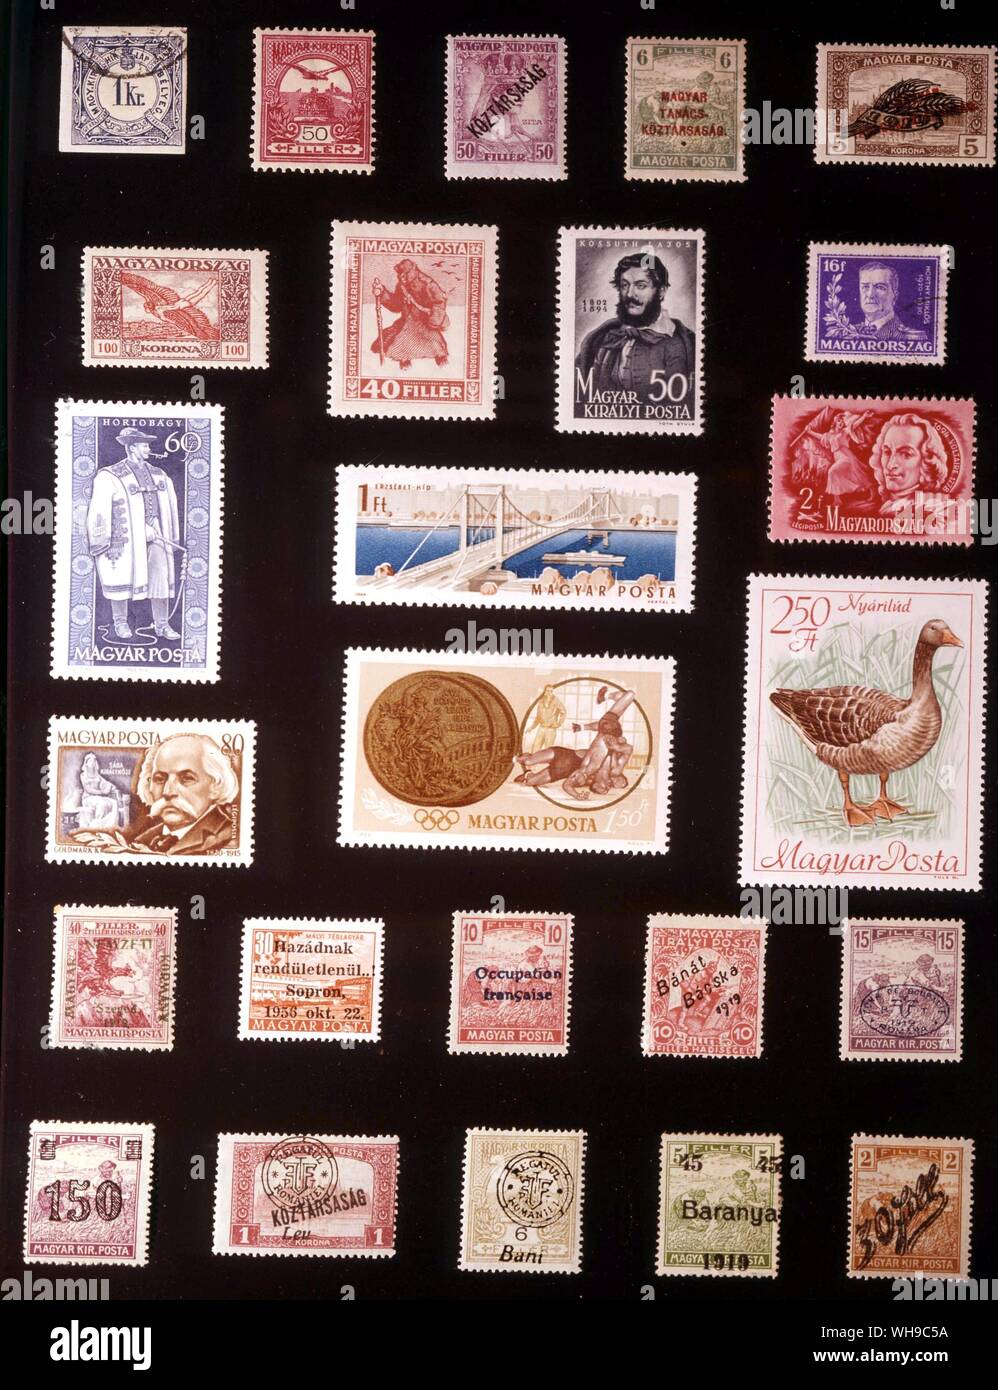 EUROPE - HUNGARY: (left to right) 1. 1 krajczar, newspaper stamp, 1868, 2. 50 filler, 1900, 3. 50 filler, 1918, 4. 6 filler, 1919, 5. 5 korona, 1920, 6. 100 korona, 1924, 7. 40 filler, 1920, 8. 50 filler, 1944, 9. 16 filler, 1930, 10. 60 filler, 1963, 11. 1 forint, 1964, 12. 2 filler, 1948, 13. 80 filler, 19653, 14. 1.50 forint, 1965, 15. 2.50 forint, 1968, 16. Szeged, 40 filler, 1919, 17. Sopron, 30 filler, 1956, 18. French occupation, 10 filler, 1919, 19. Banat Bacska, 10 filler, 1919, 20. Debrecen, 15 filler, 1919, 21. Temesvar, 150 on 3 filler, 1919, 22. Transylvania, 1 leu surcharged on Stock Photo